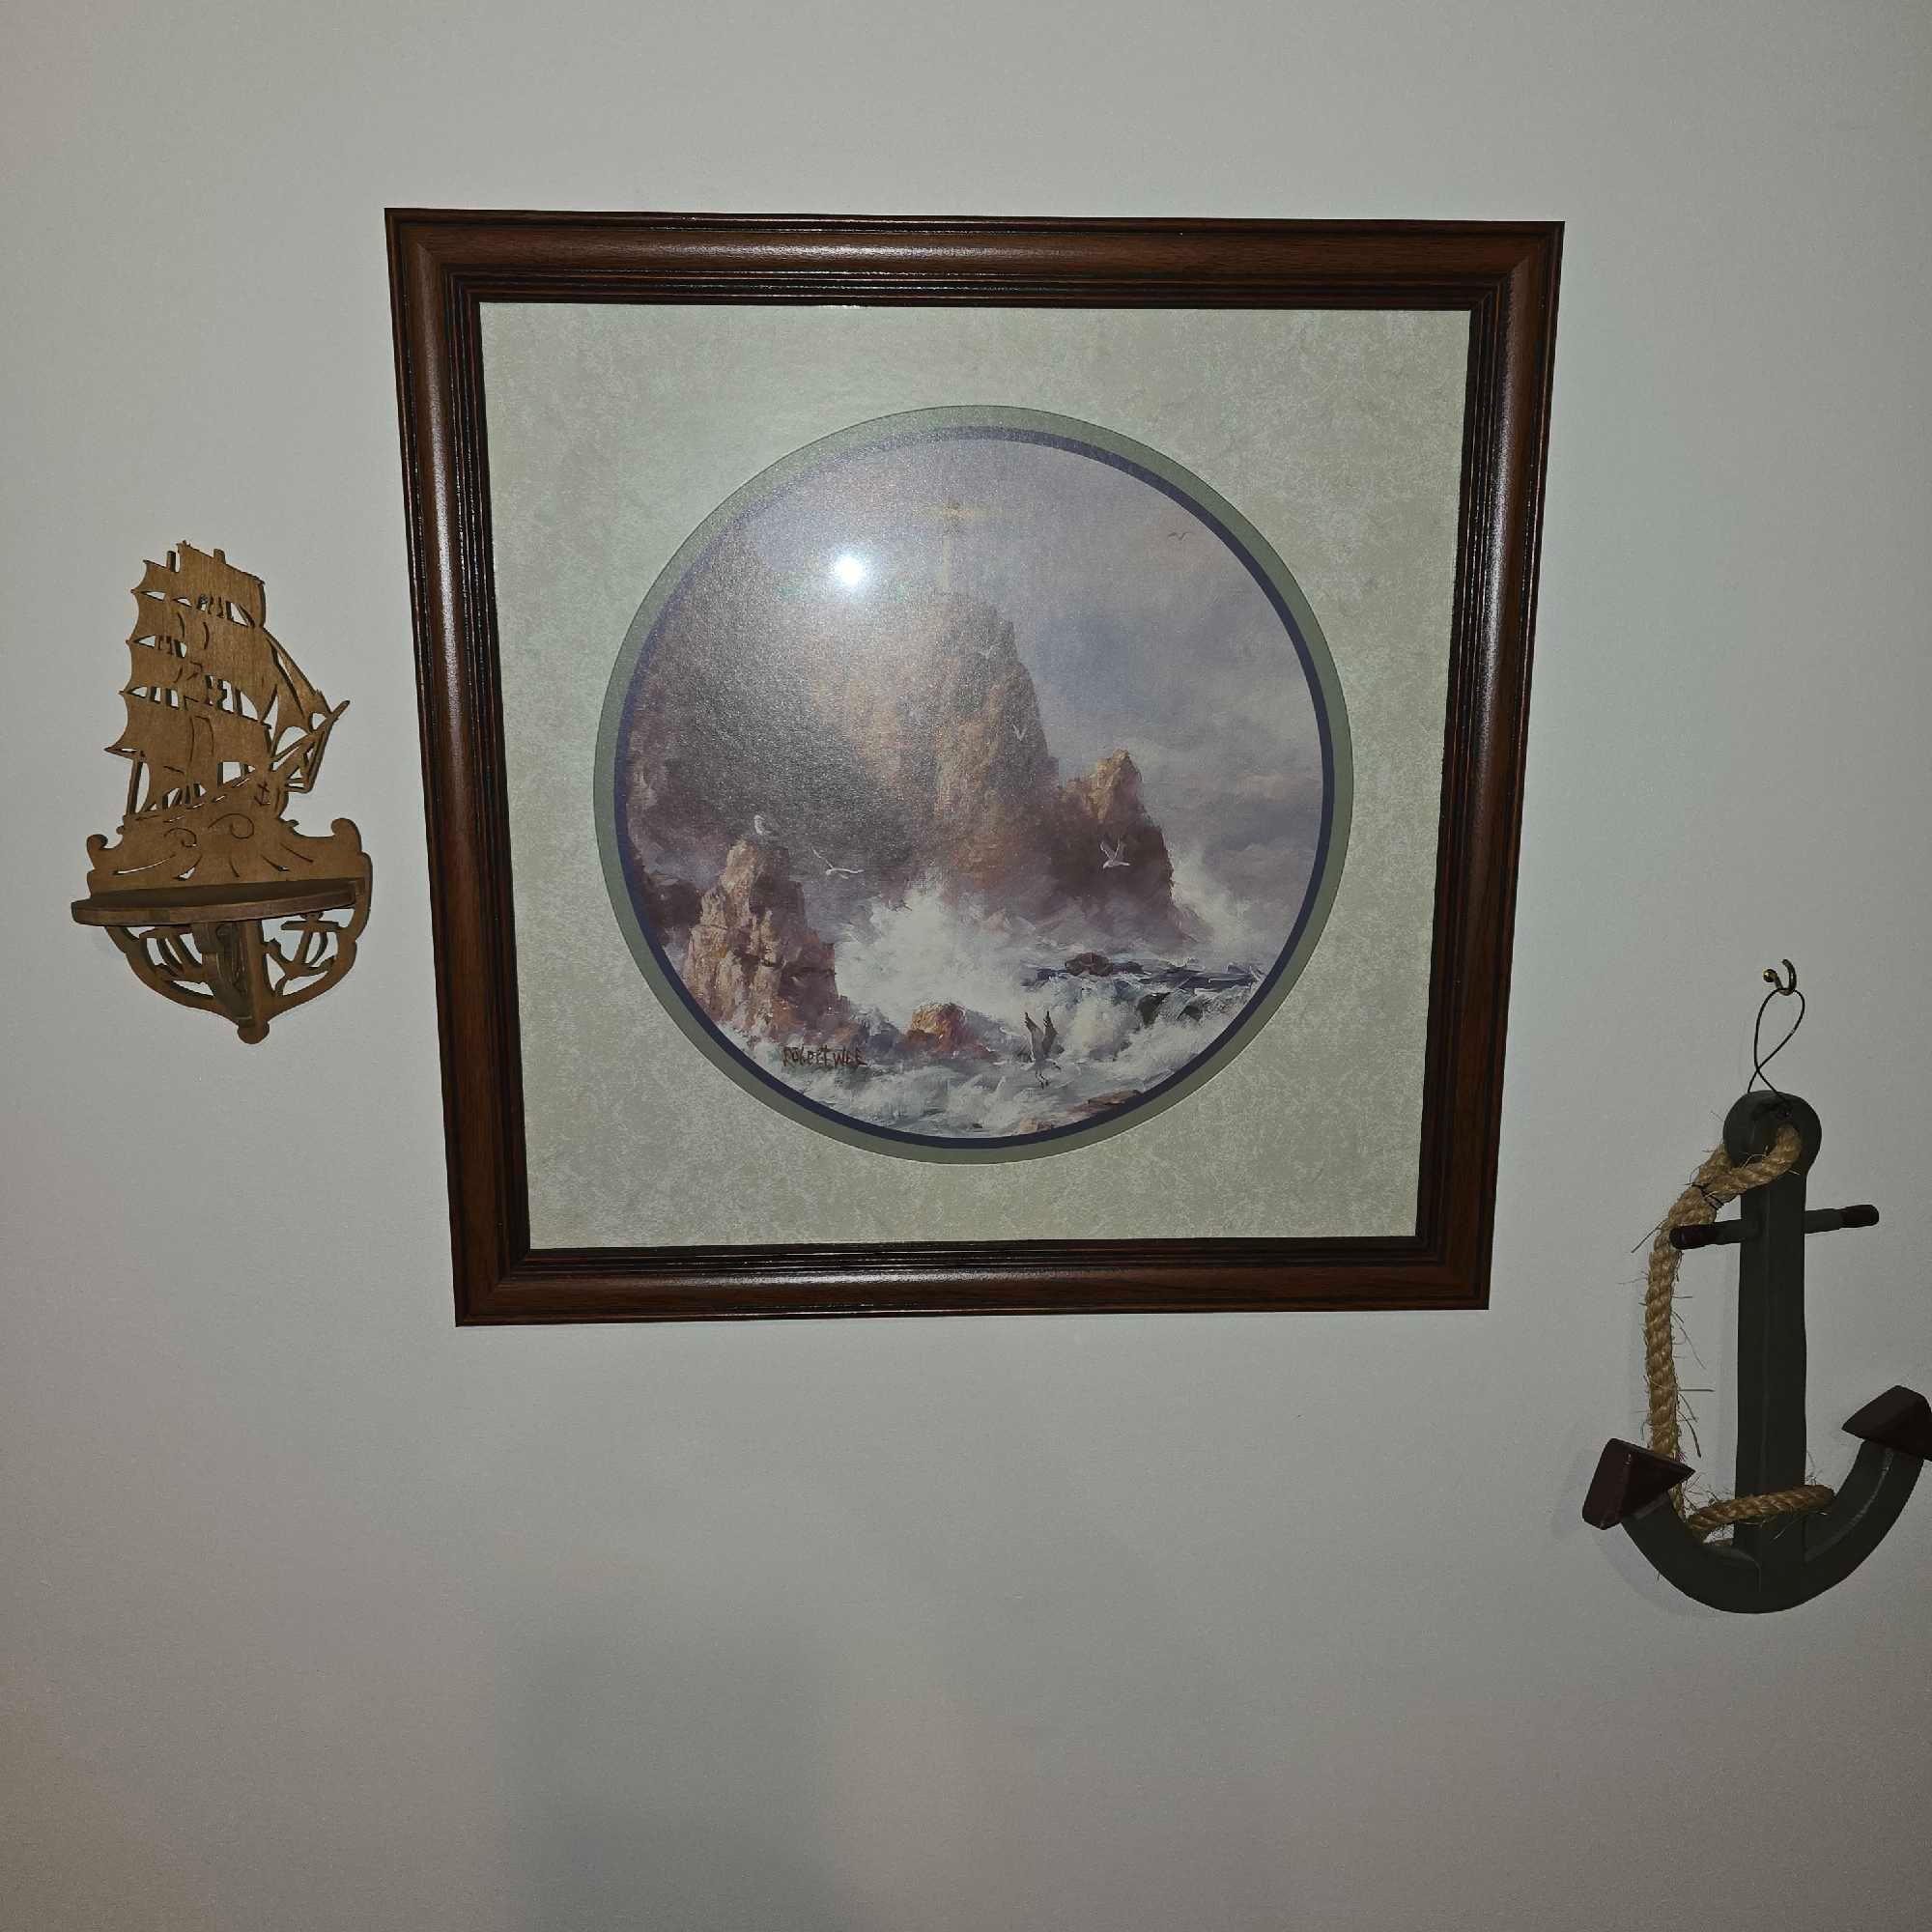 Nautical Wall Decor, magazine rack, dog fig, small bench, cushioned stool, globe, Indian figurine